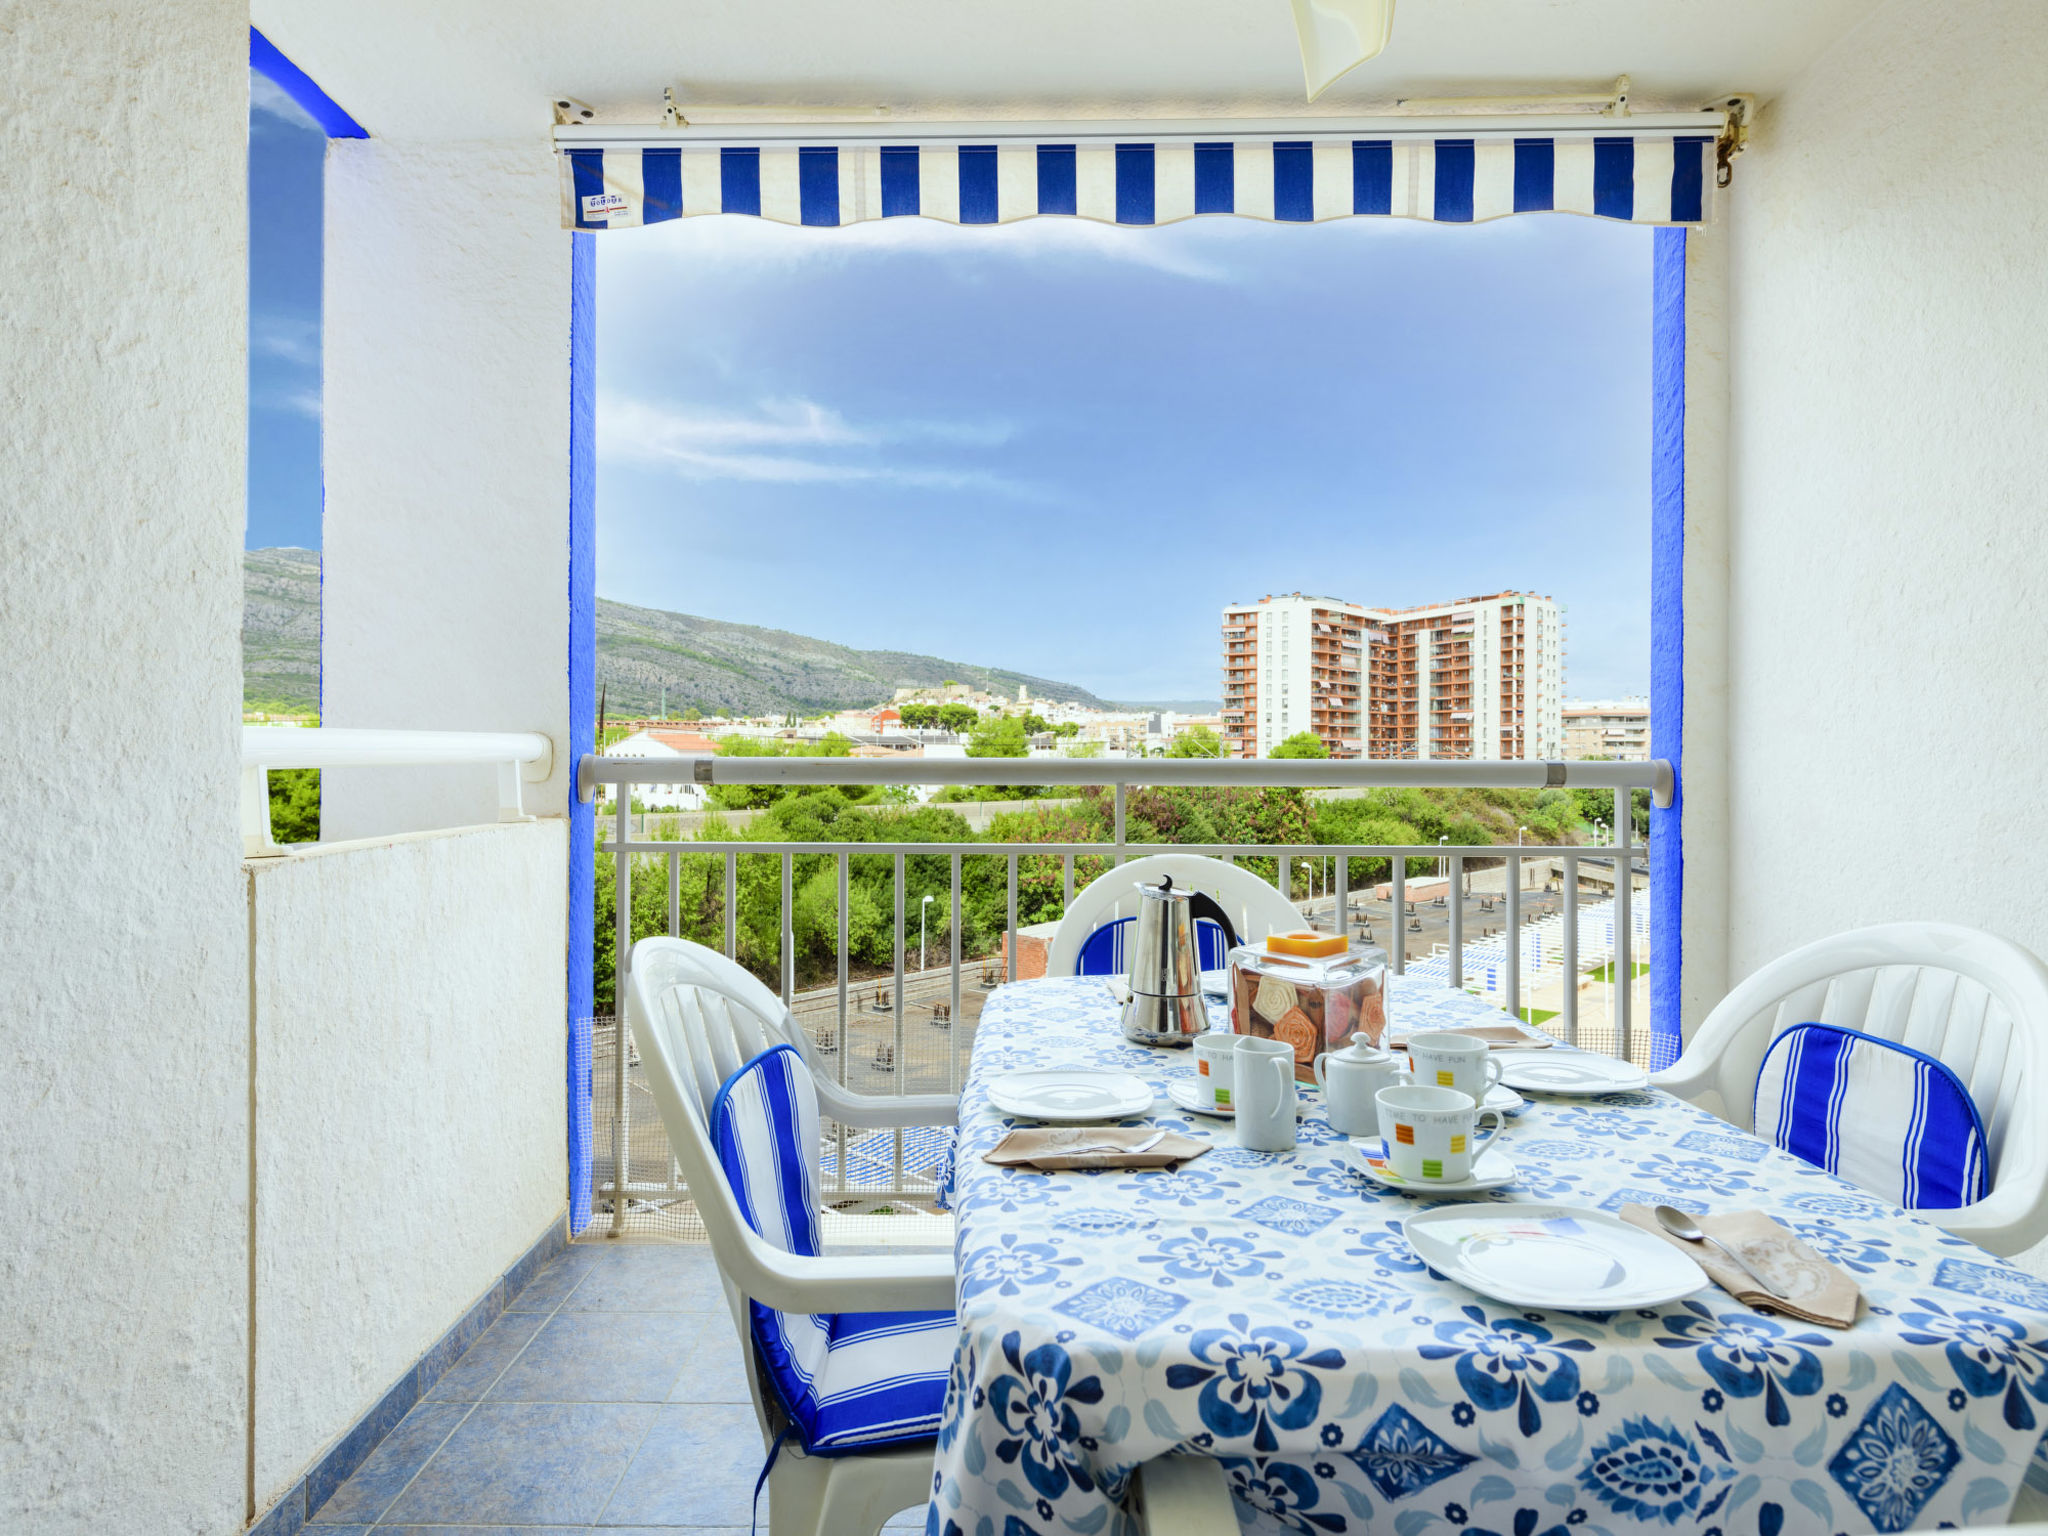 Photo 7 - Appartement de 2 chambres à Oropesa del Mar avec piscine et vues à la mer